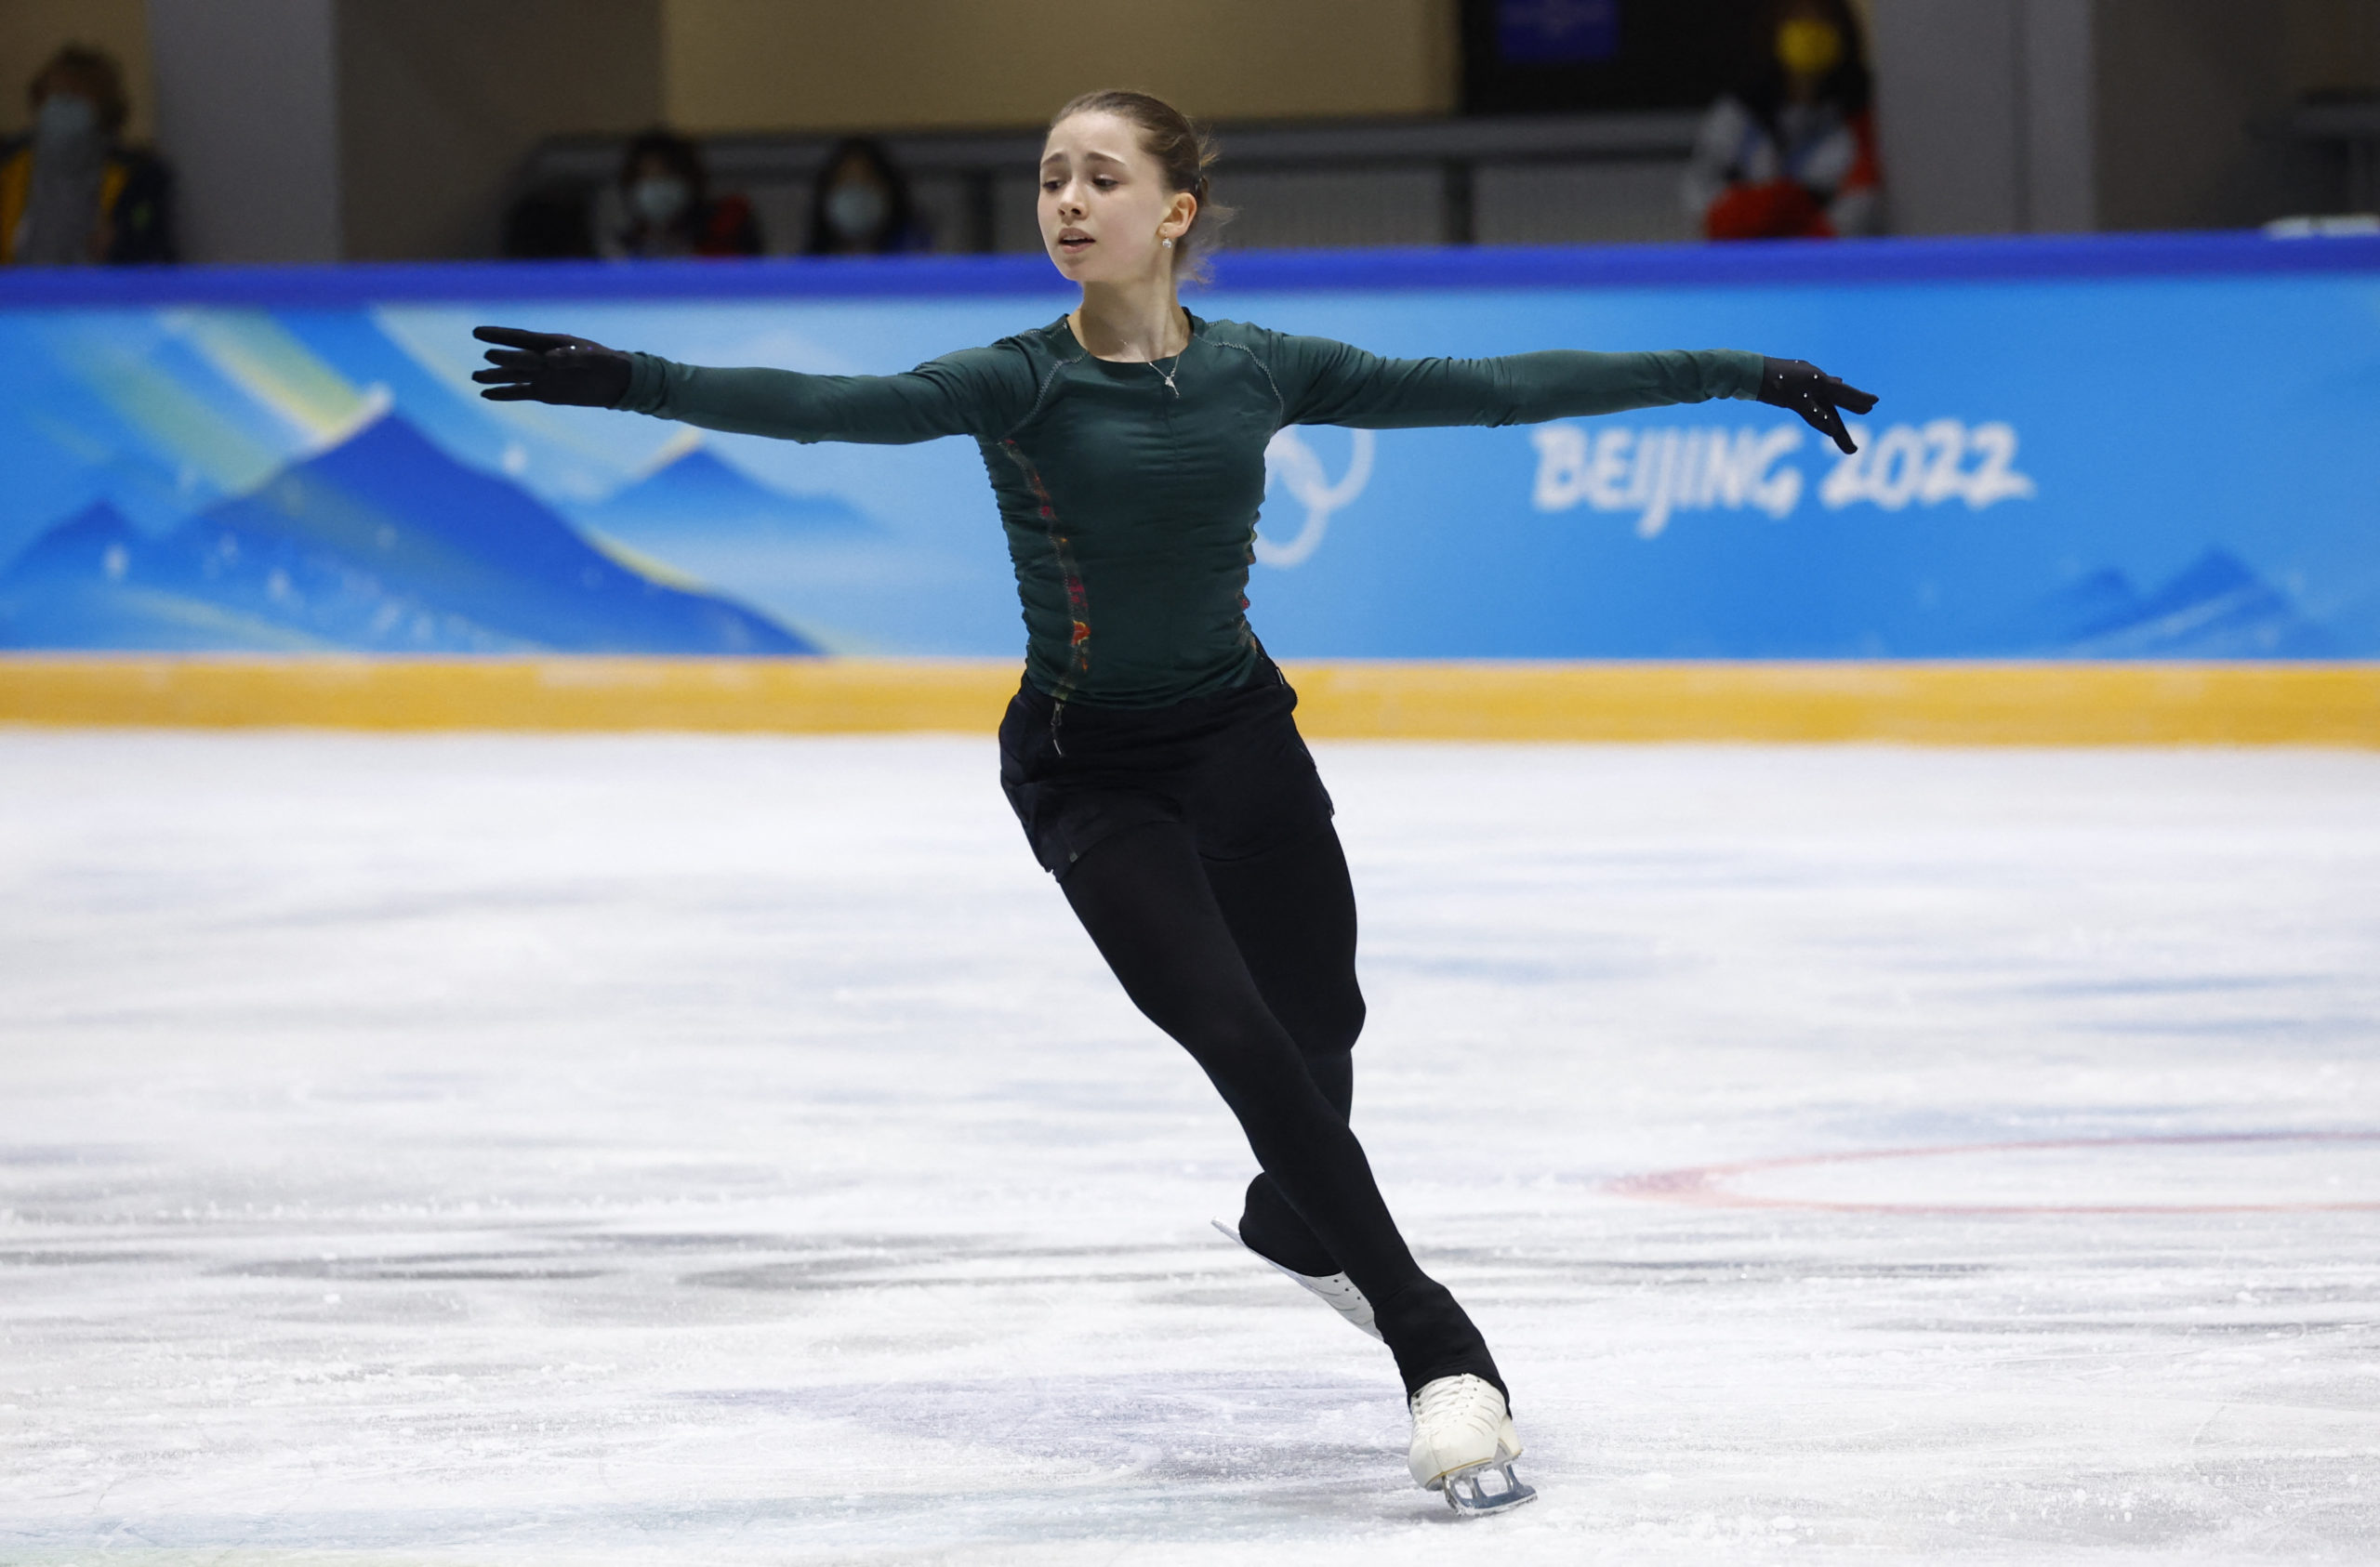 2022 Beijing Olympics - Figure Skating - Training - Rink Capital Indoor Stadium, Beijing, China - February 14, 2022. Kamila Valieva of the Russian Olympic Committee during training. 